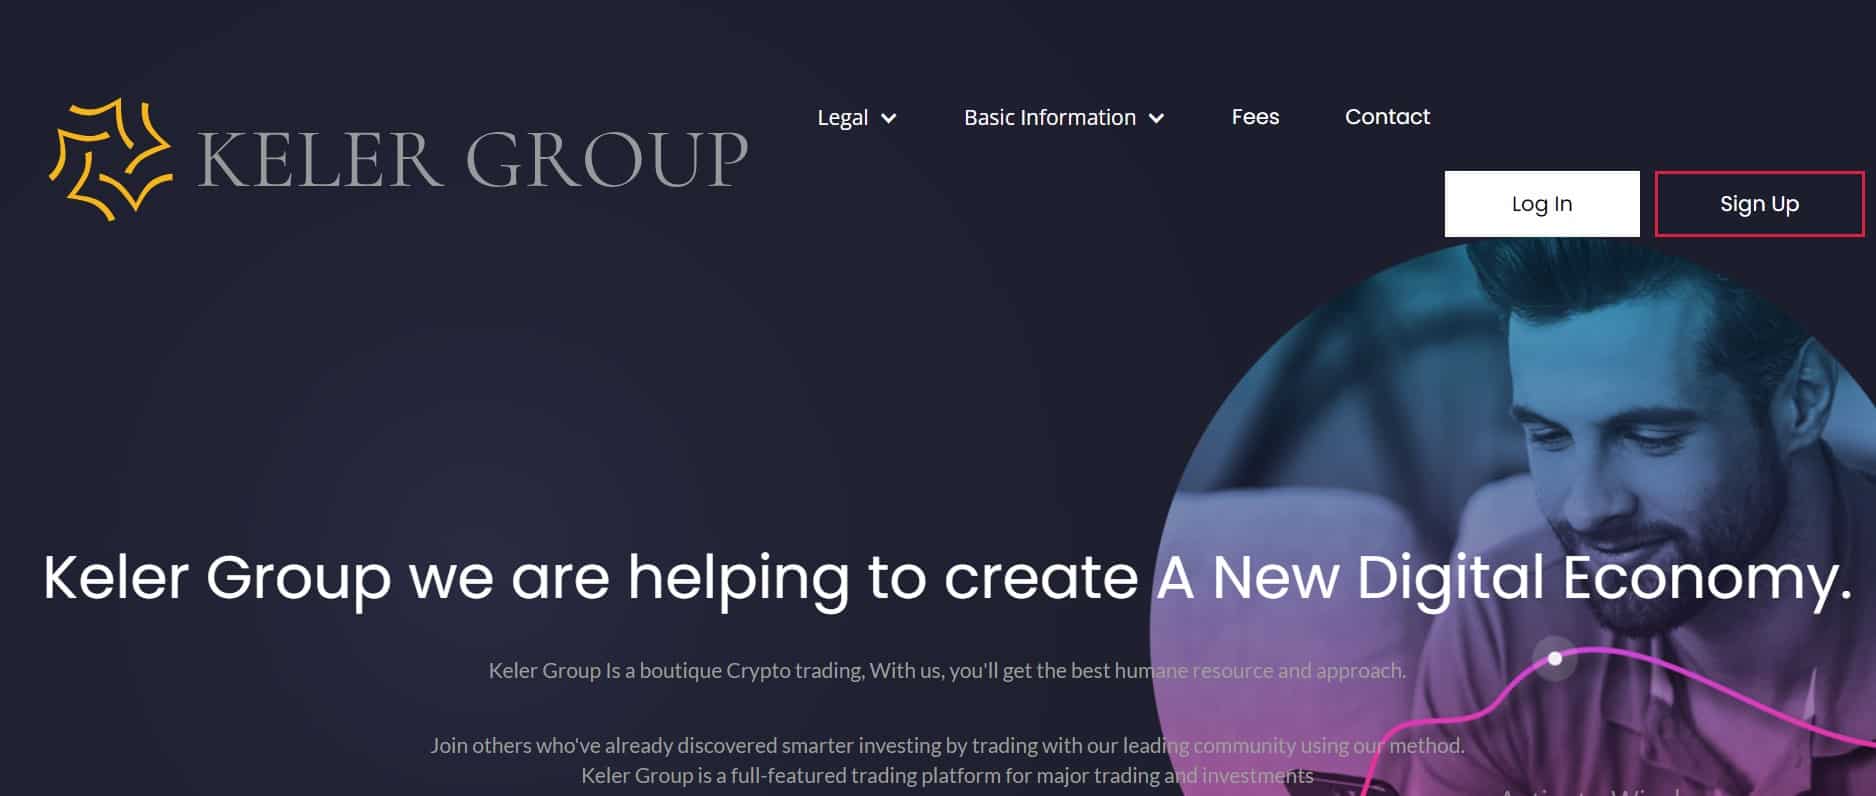 Keler Group website